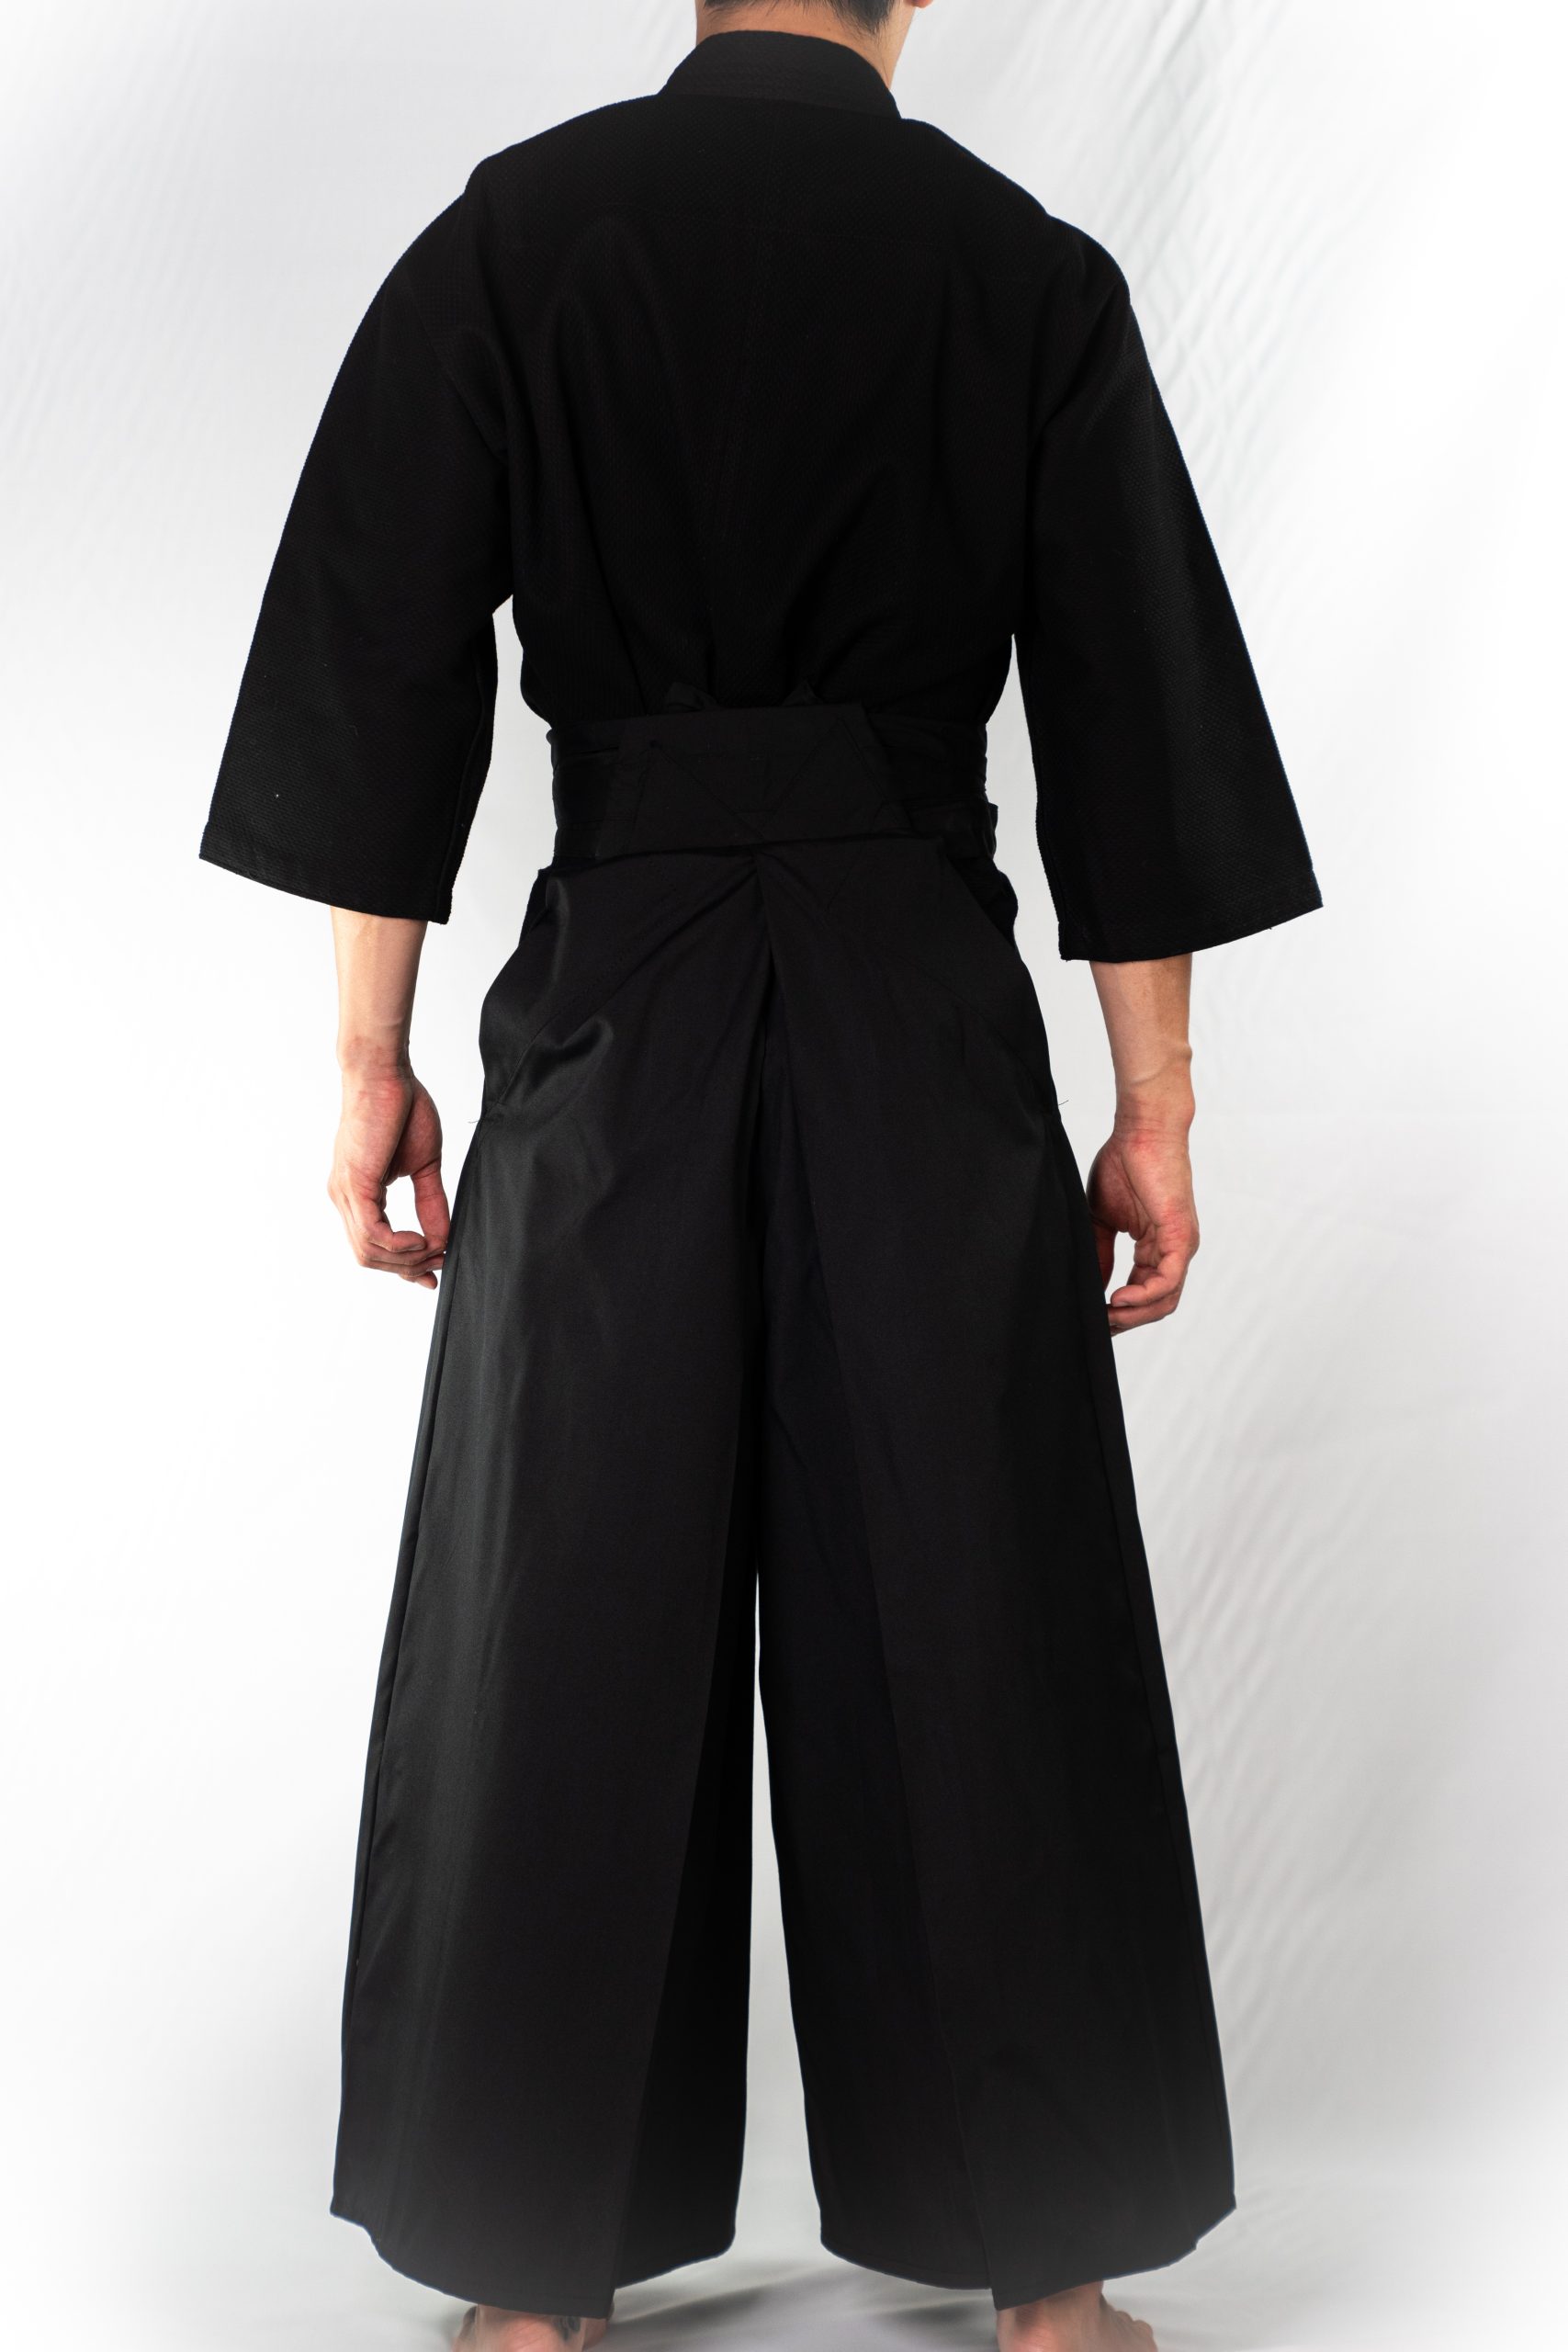 Keikogi - Kendo Jacket - Tans Martial Arts Supplier